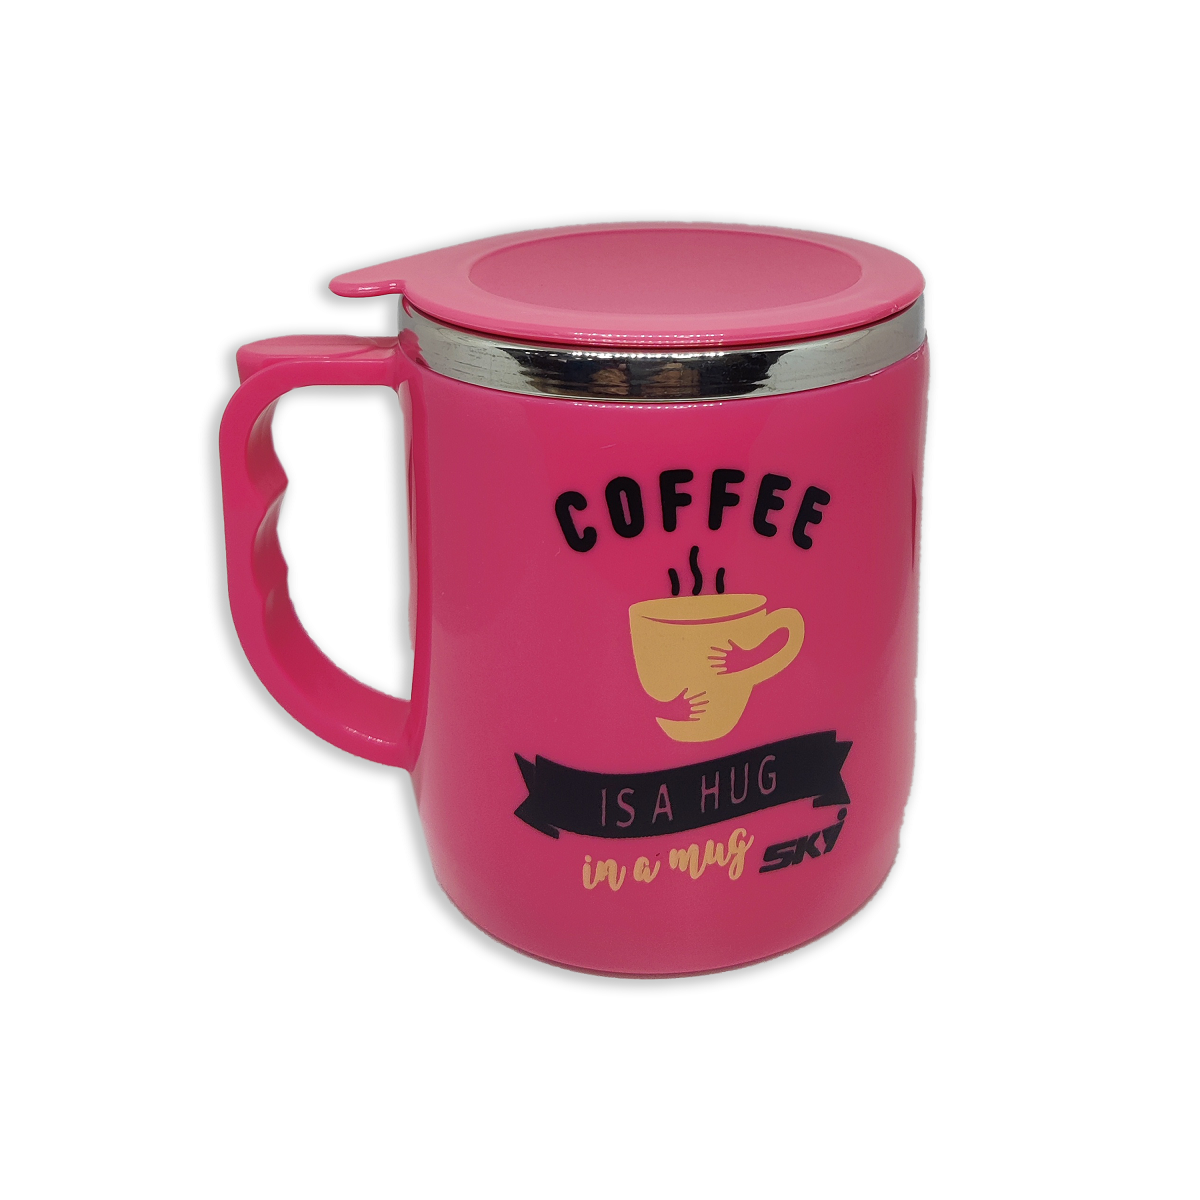 Jolly Steel Small Pink Coffee Mug